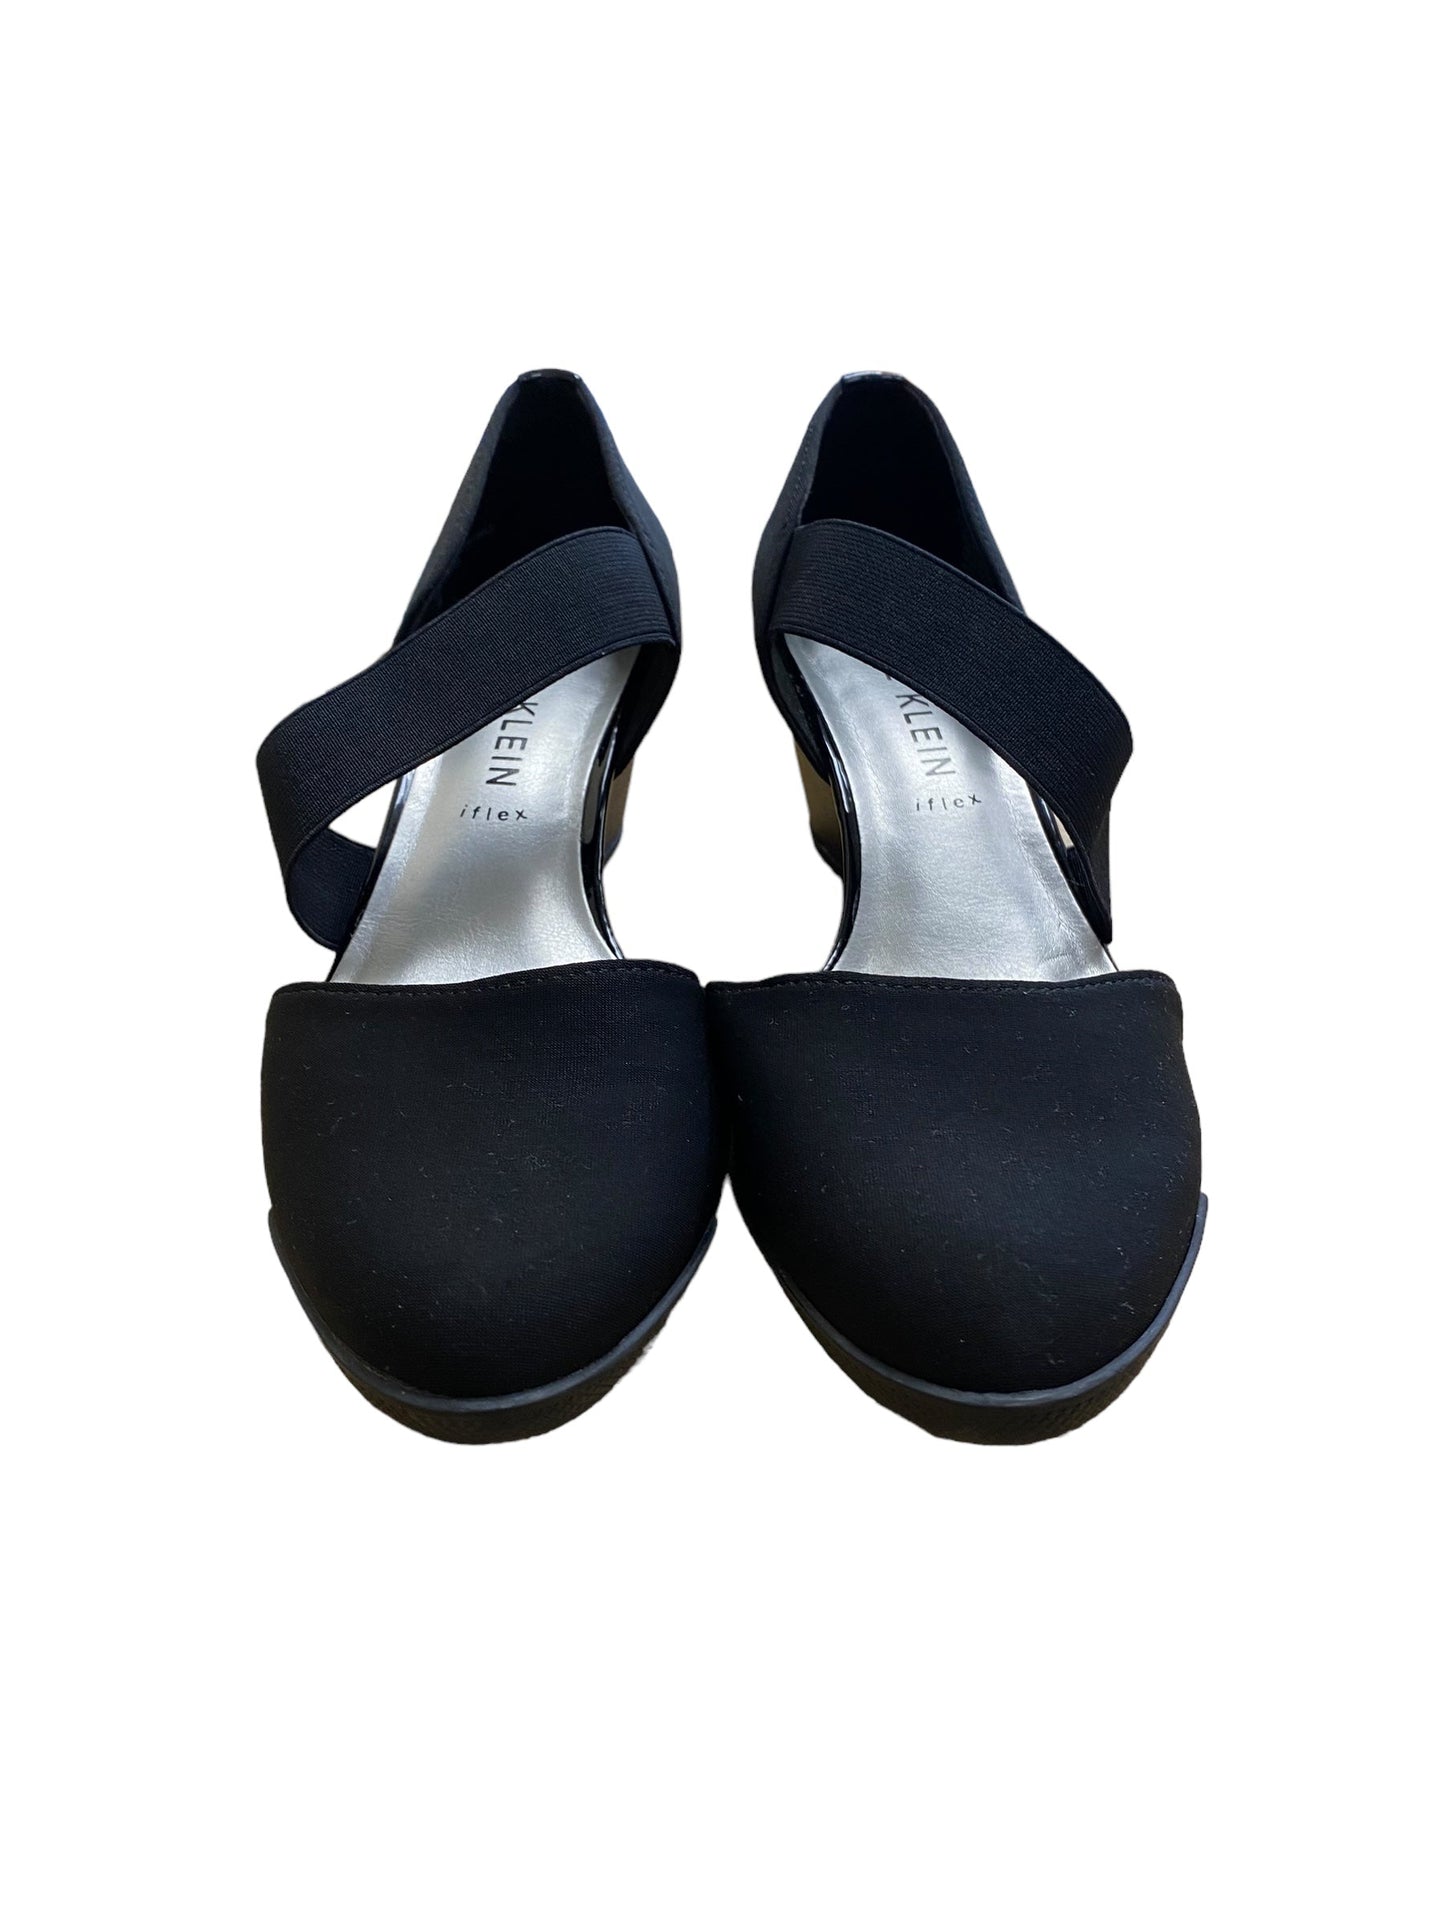 Black Shoes Heels Wedge Anne Klein, Size 7.5